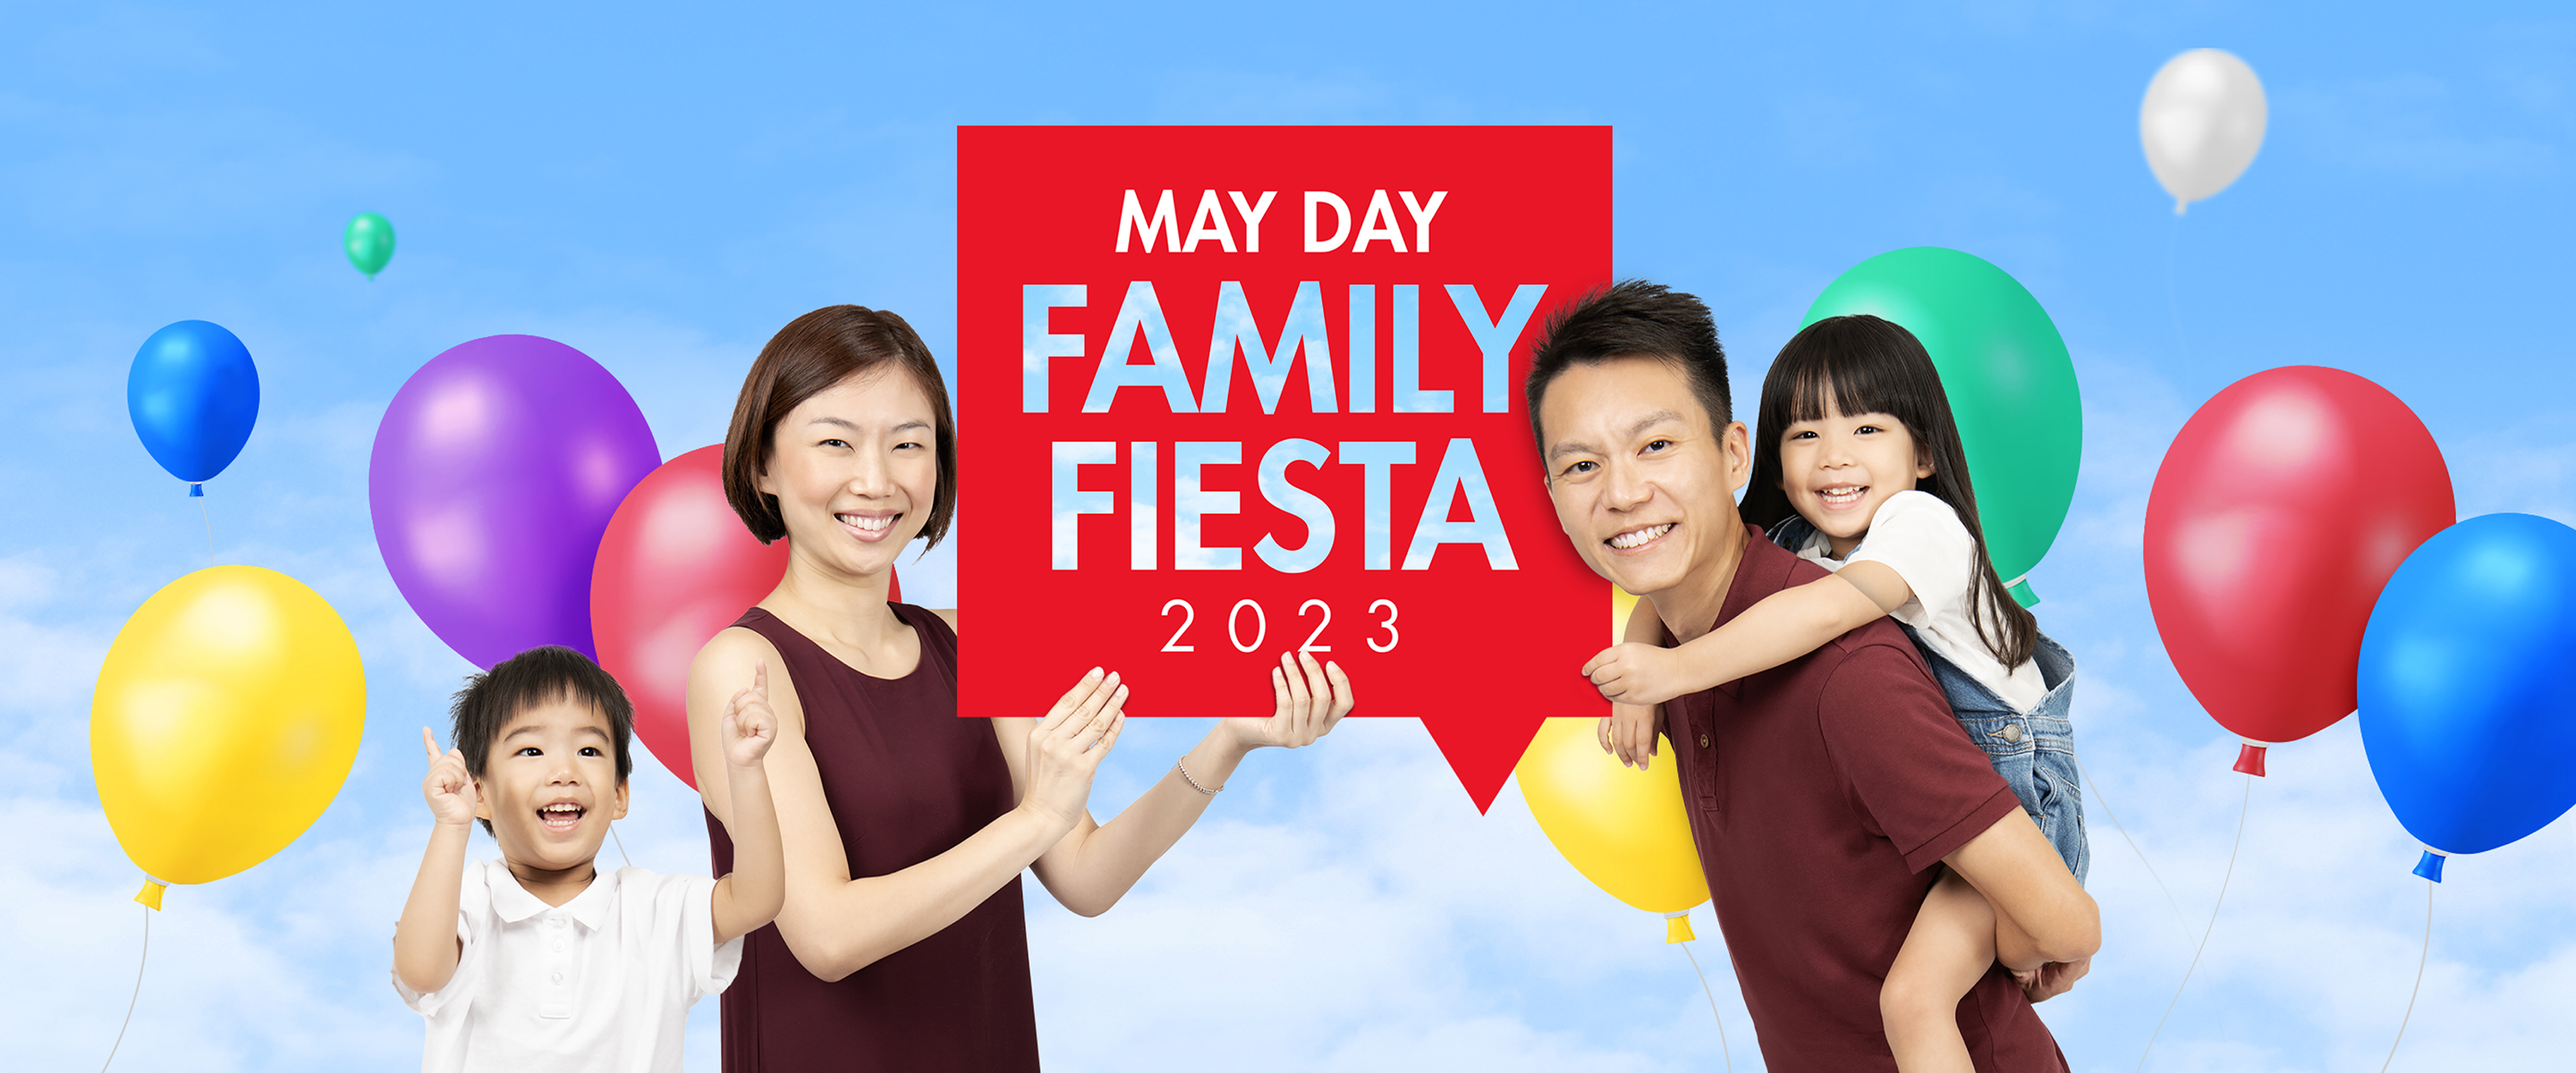 Family Fiesta U Portal event banner.jpg